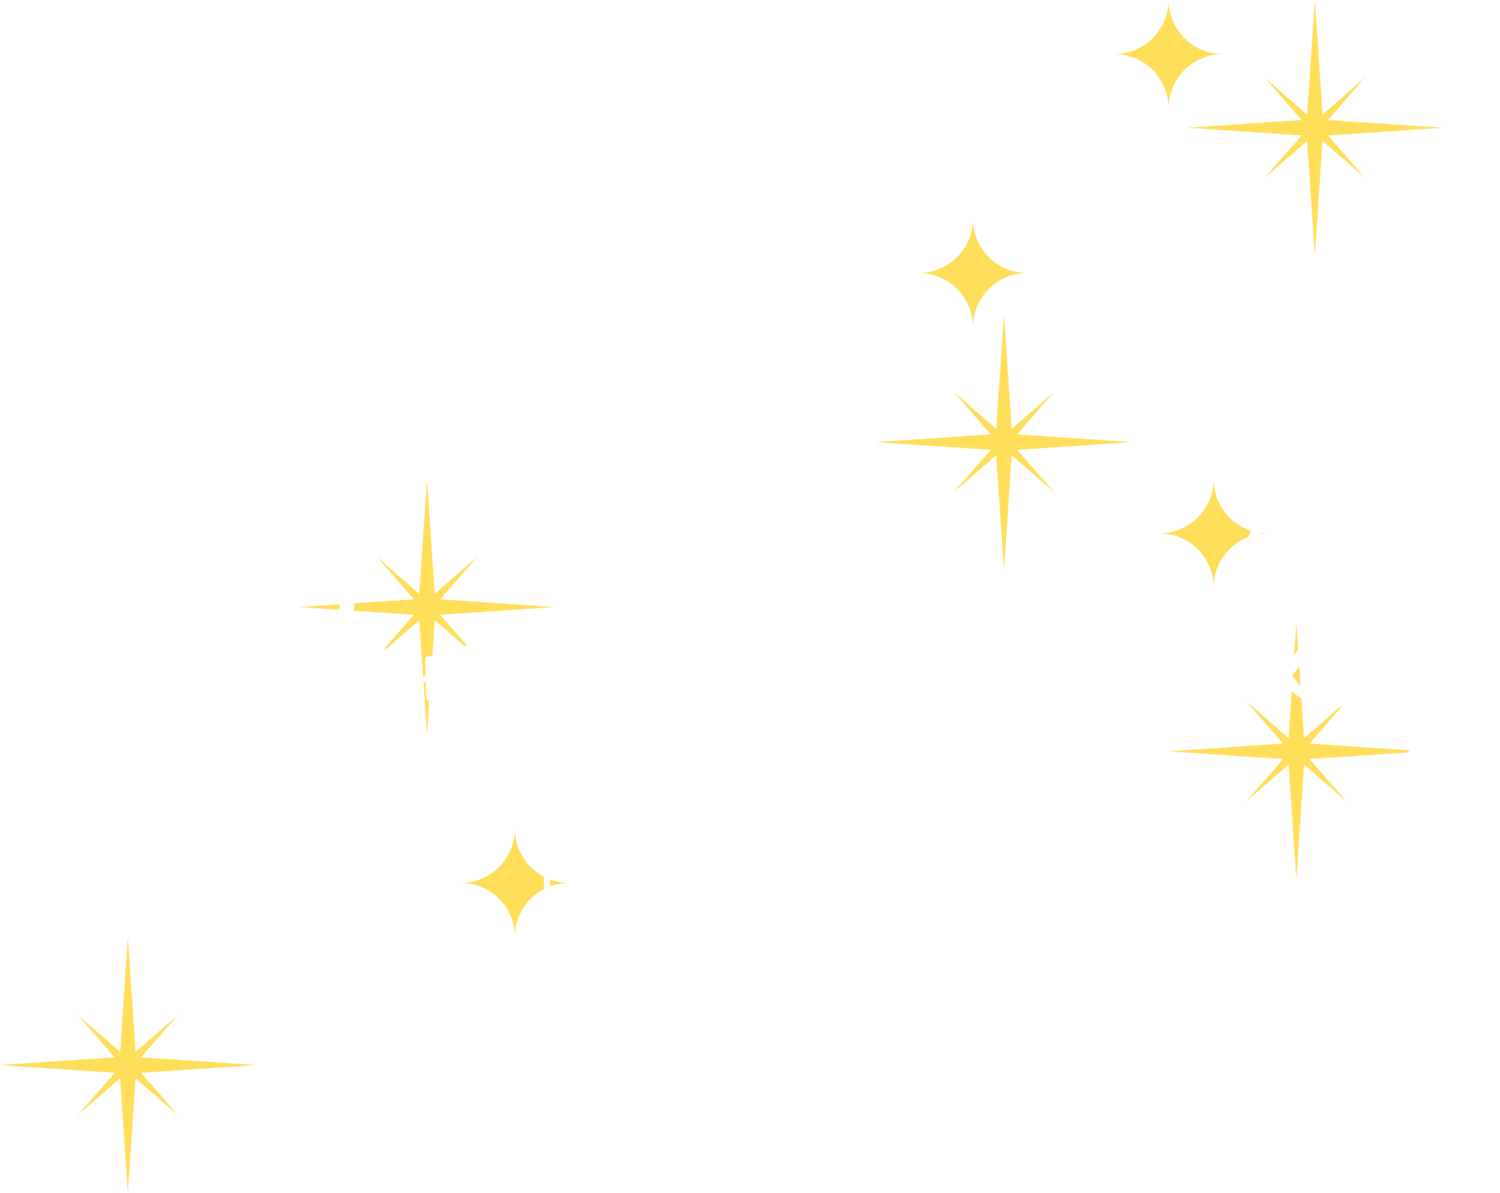 Fierce Mom Personal Coaching